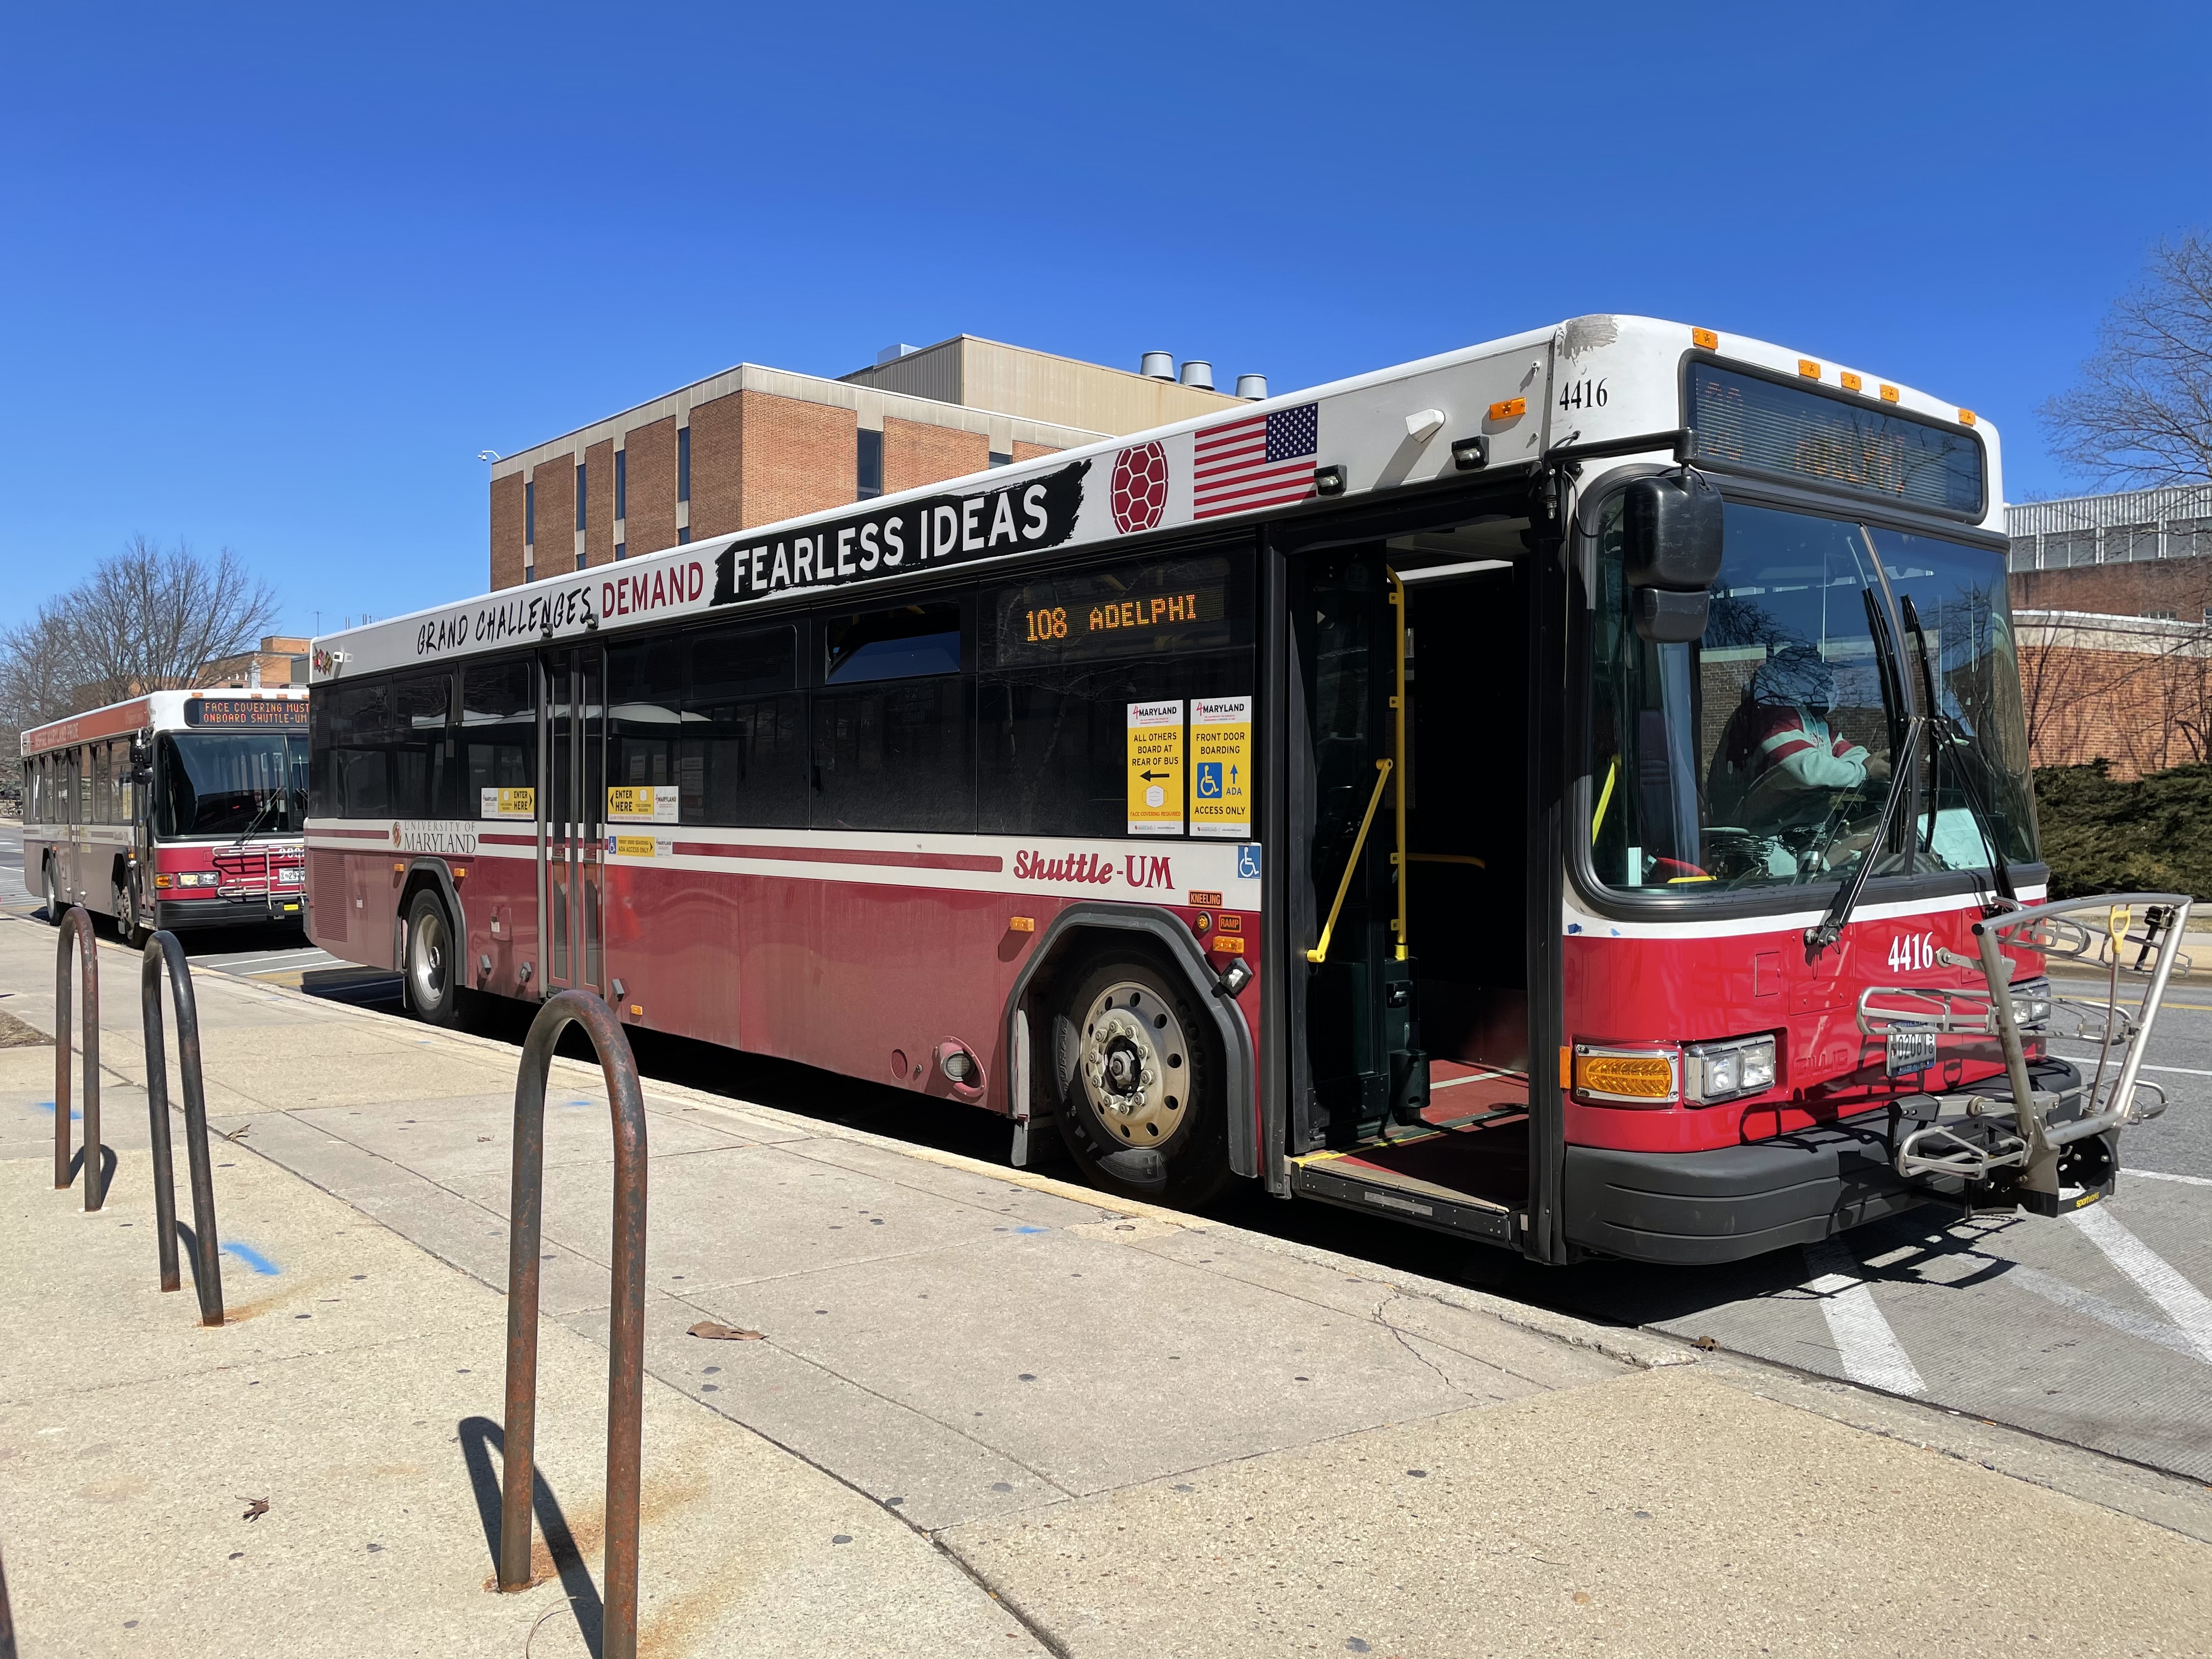 Shuttle bus 108 adelphi in front of regents